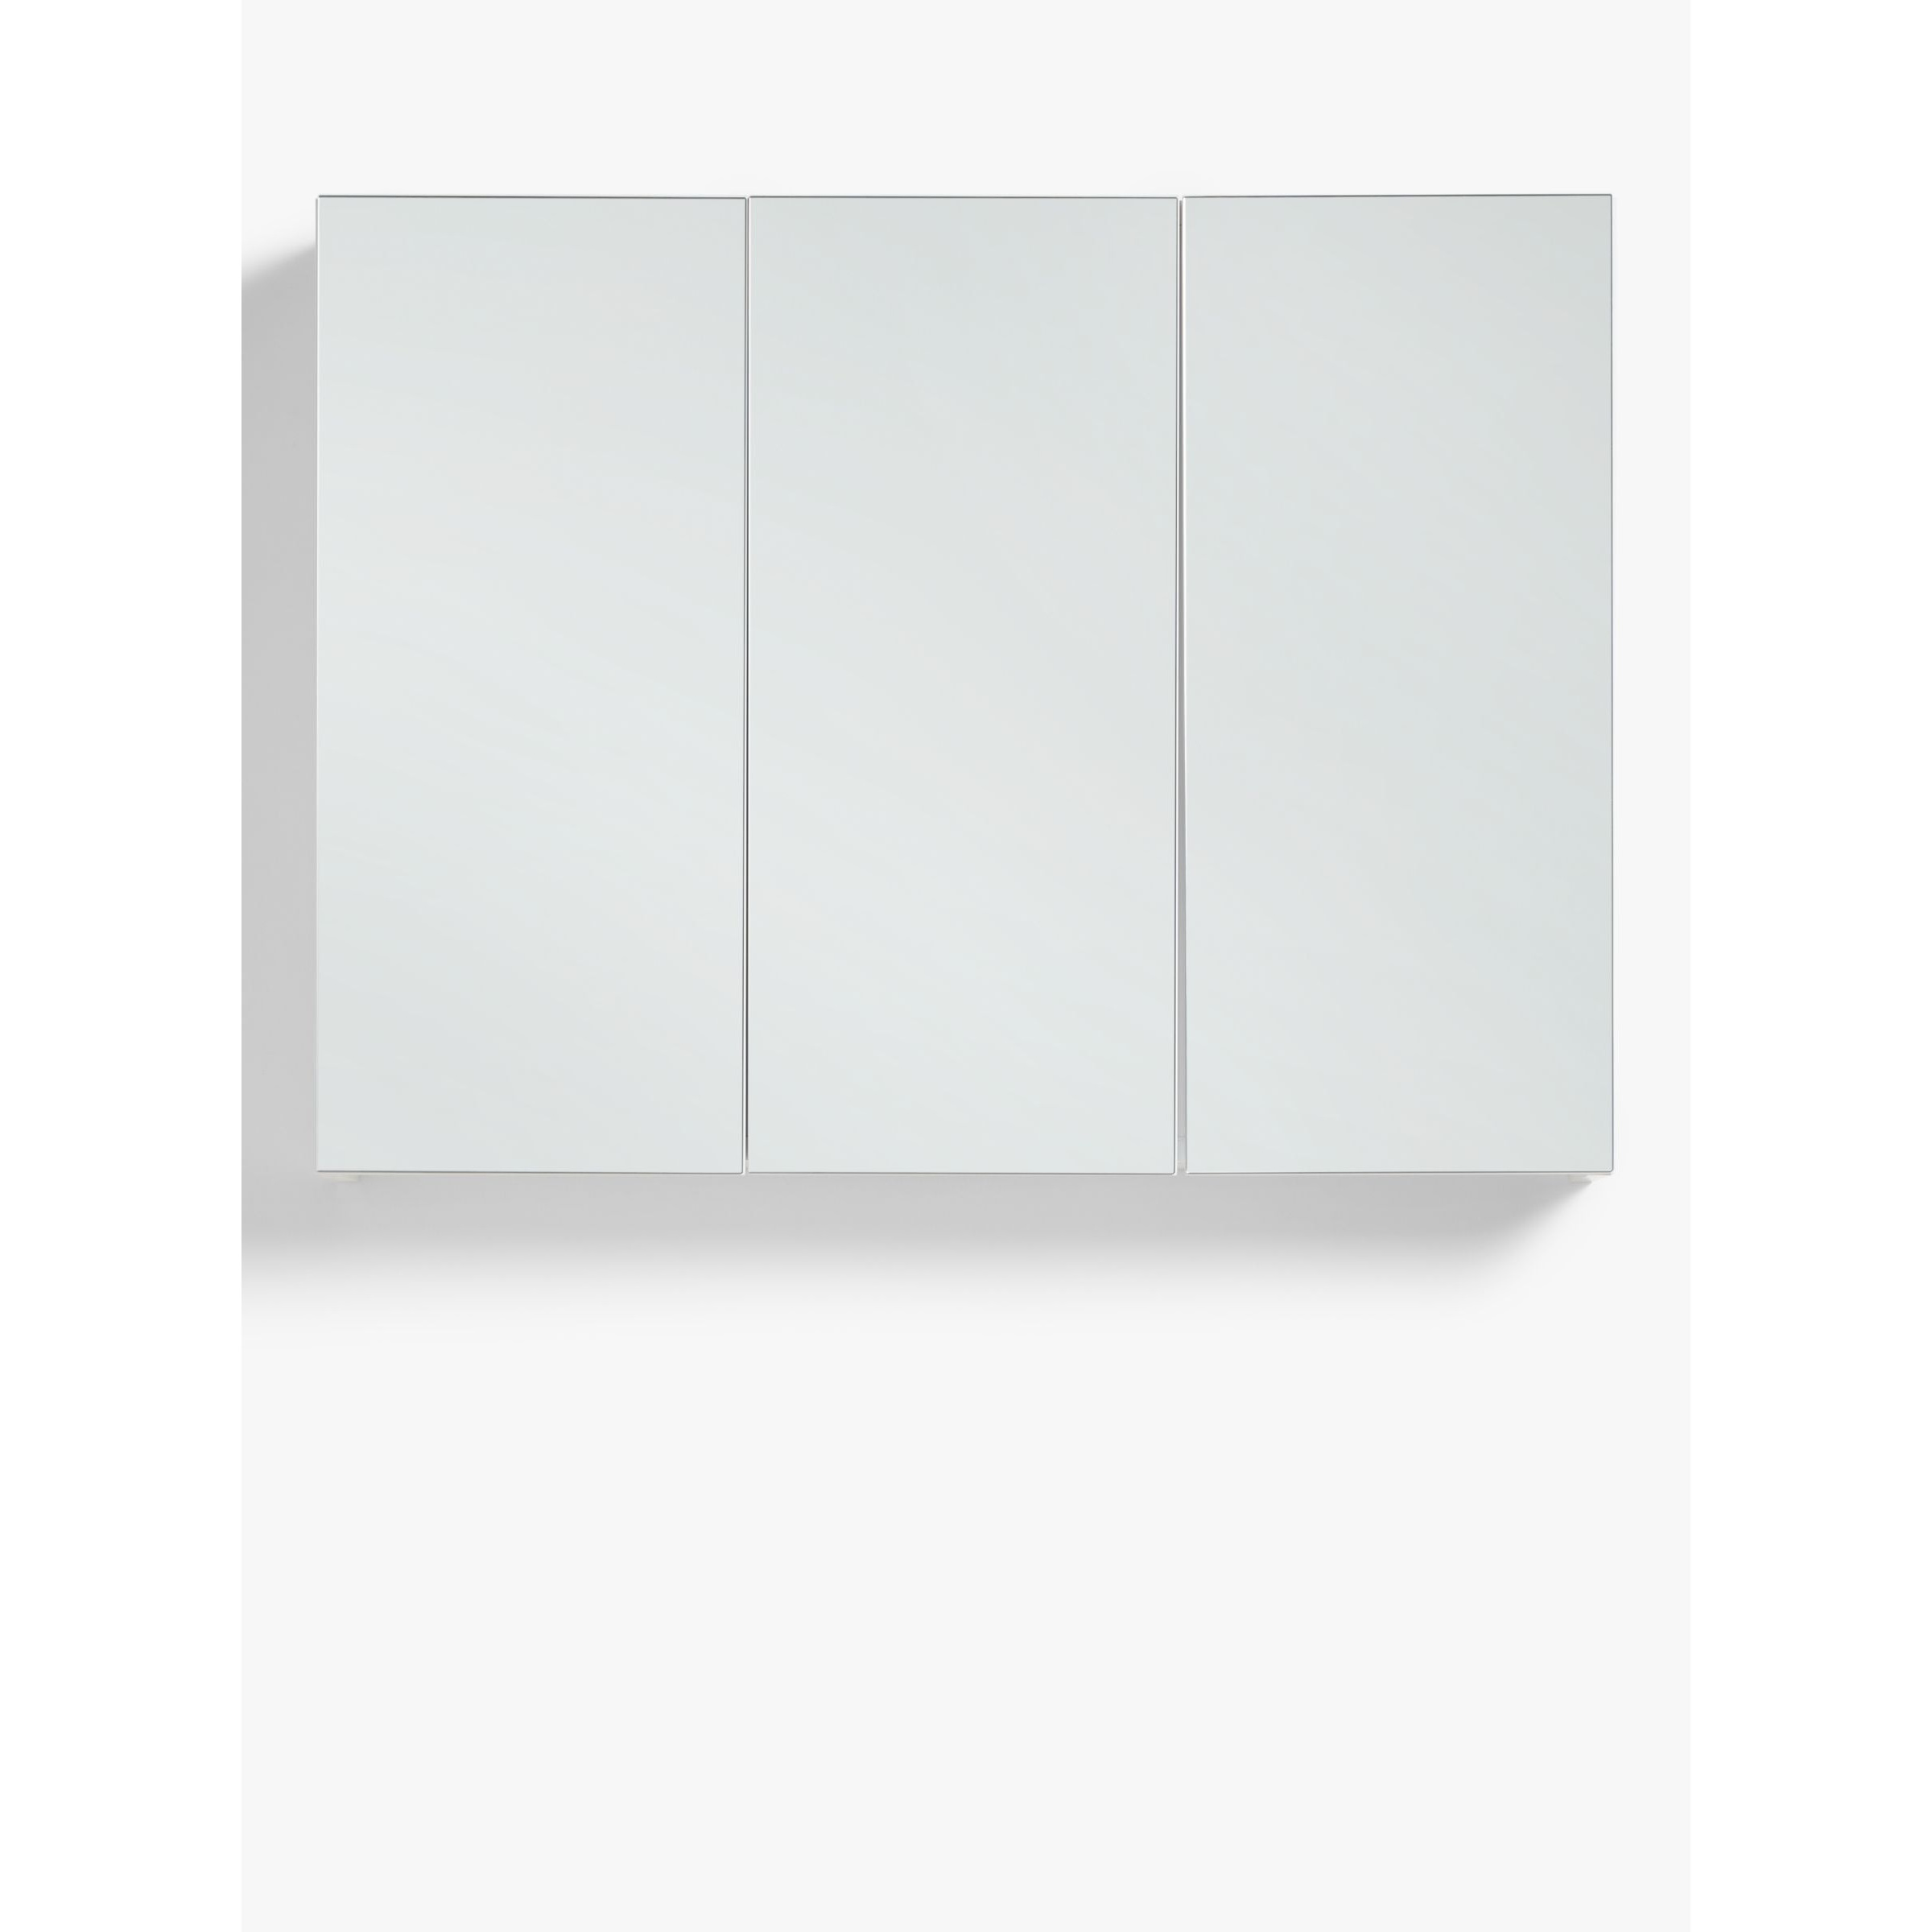 John Lewis White Gloss Triple Mirrored Bathroom Cabinet - image 1